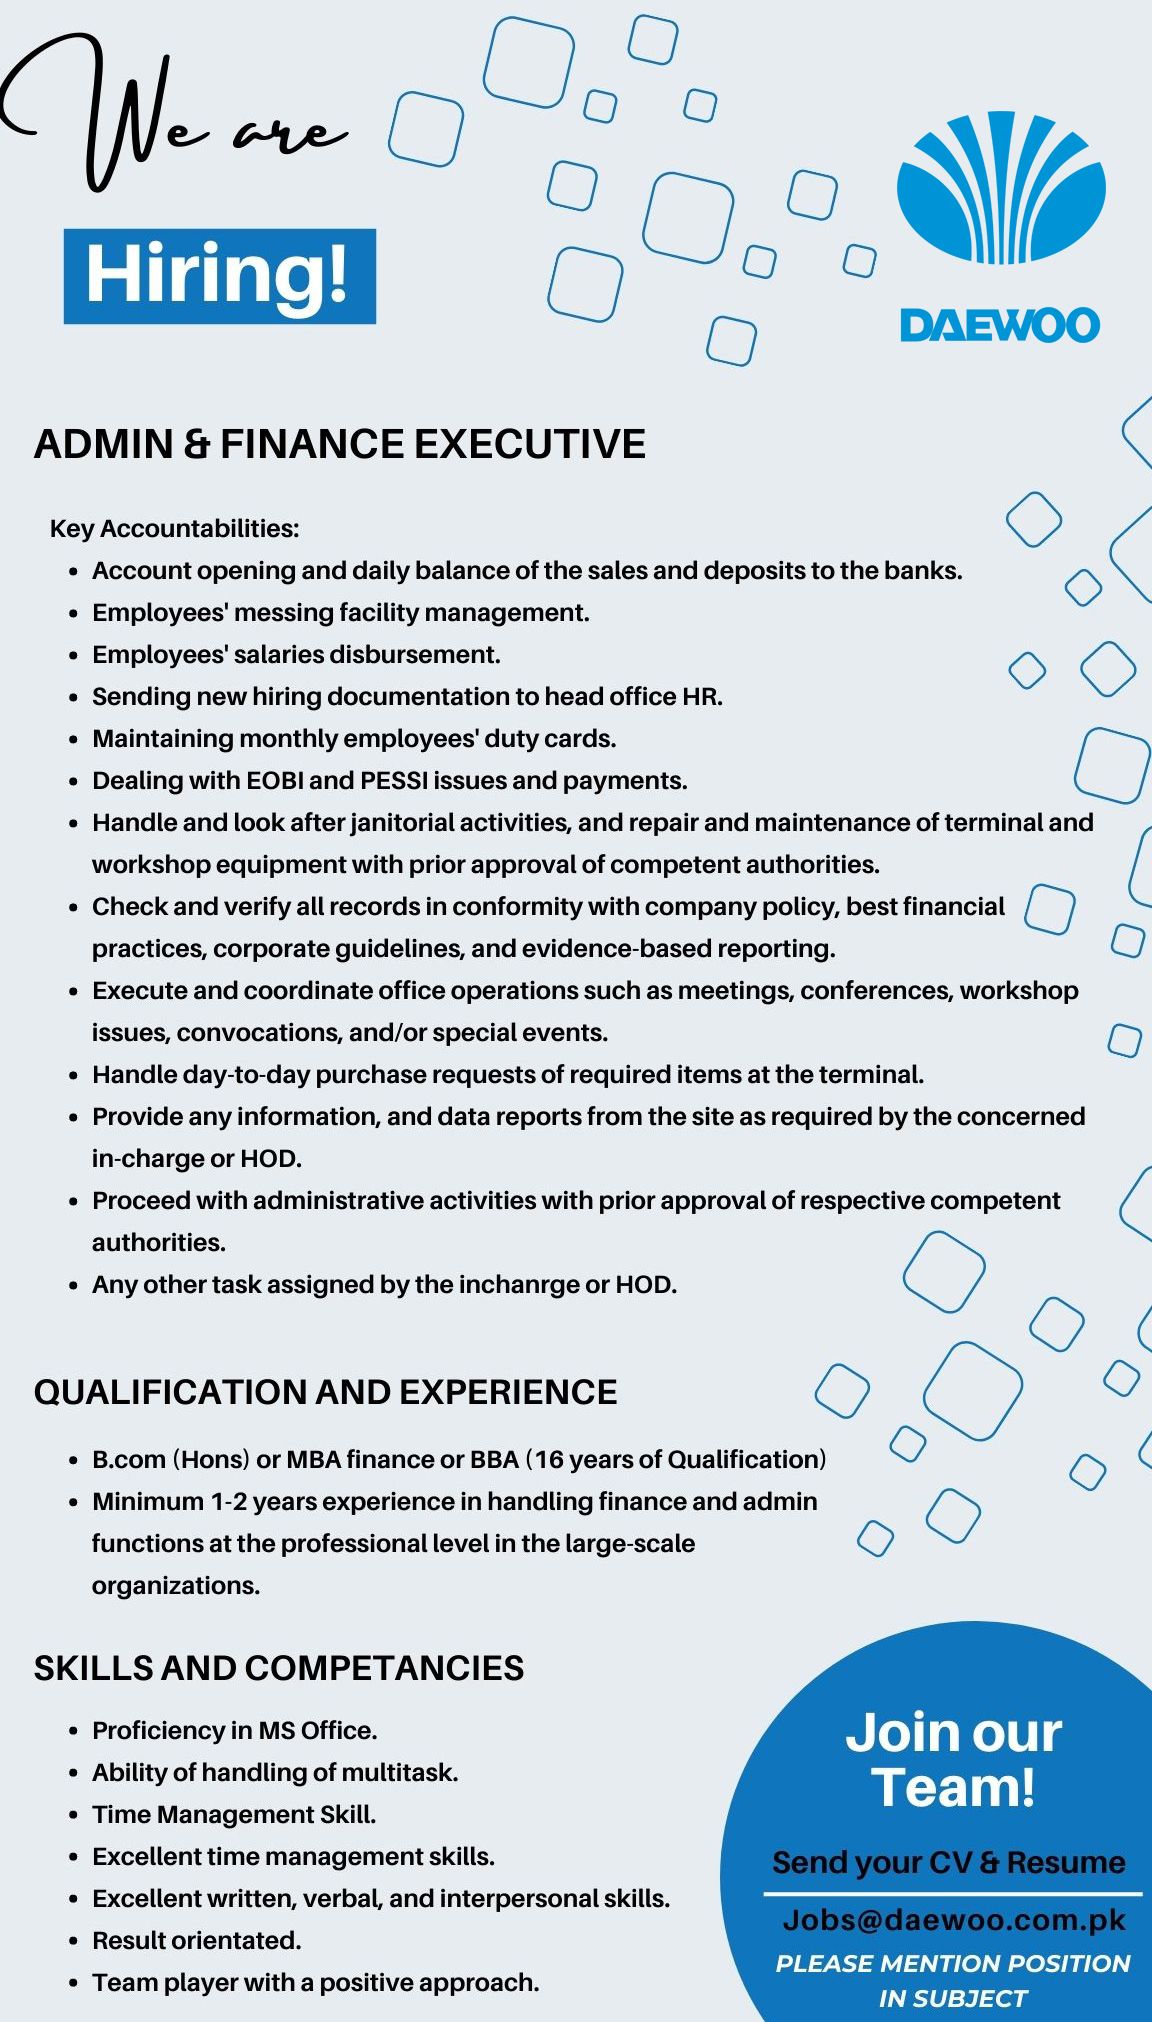 Daewoo Pakistan Express Bus Service Ltd Jobs For Admin & Finance Executive